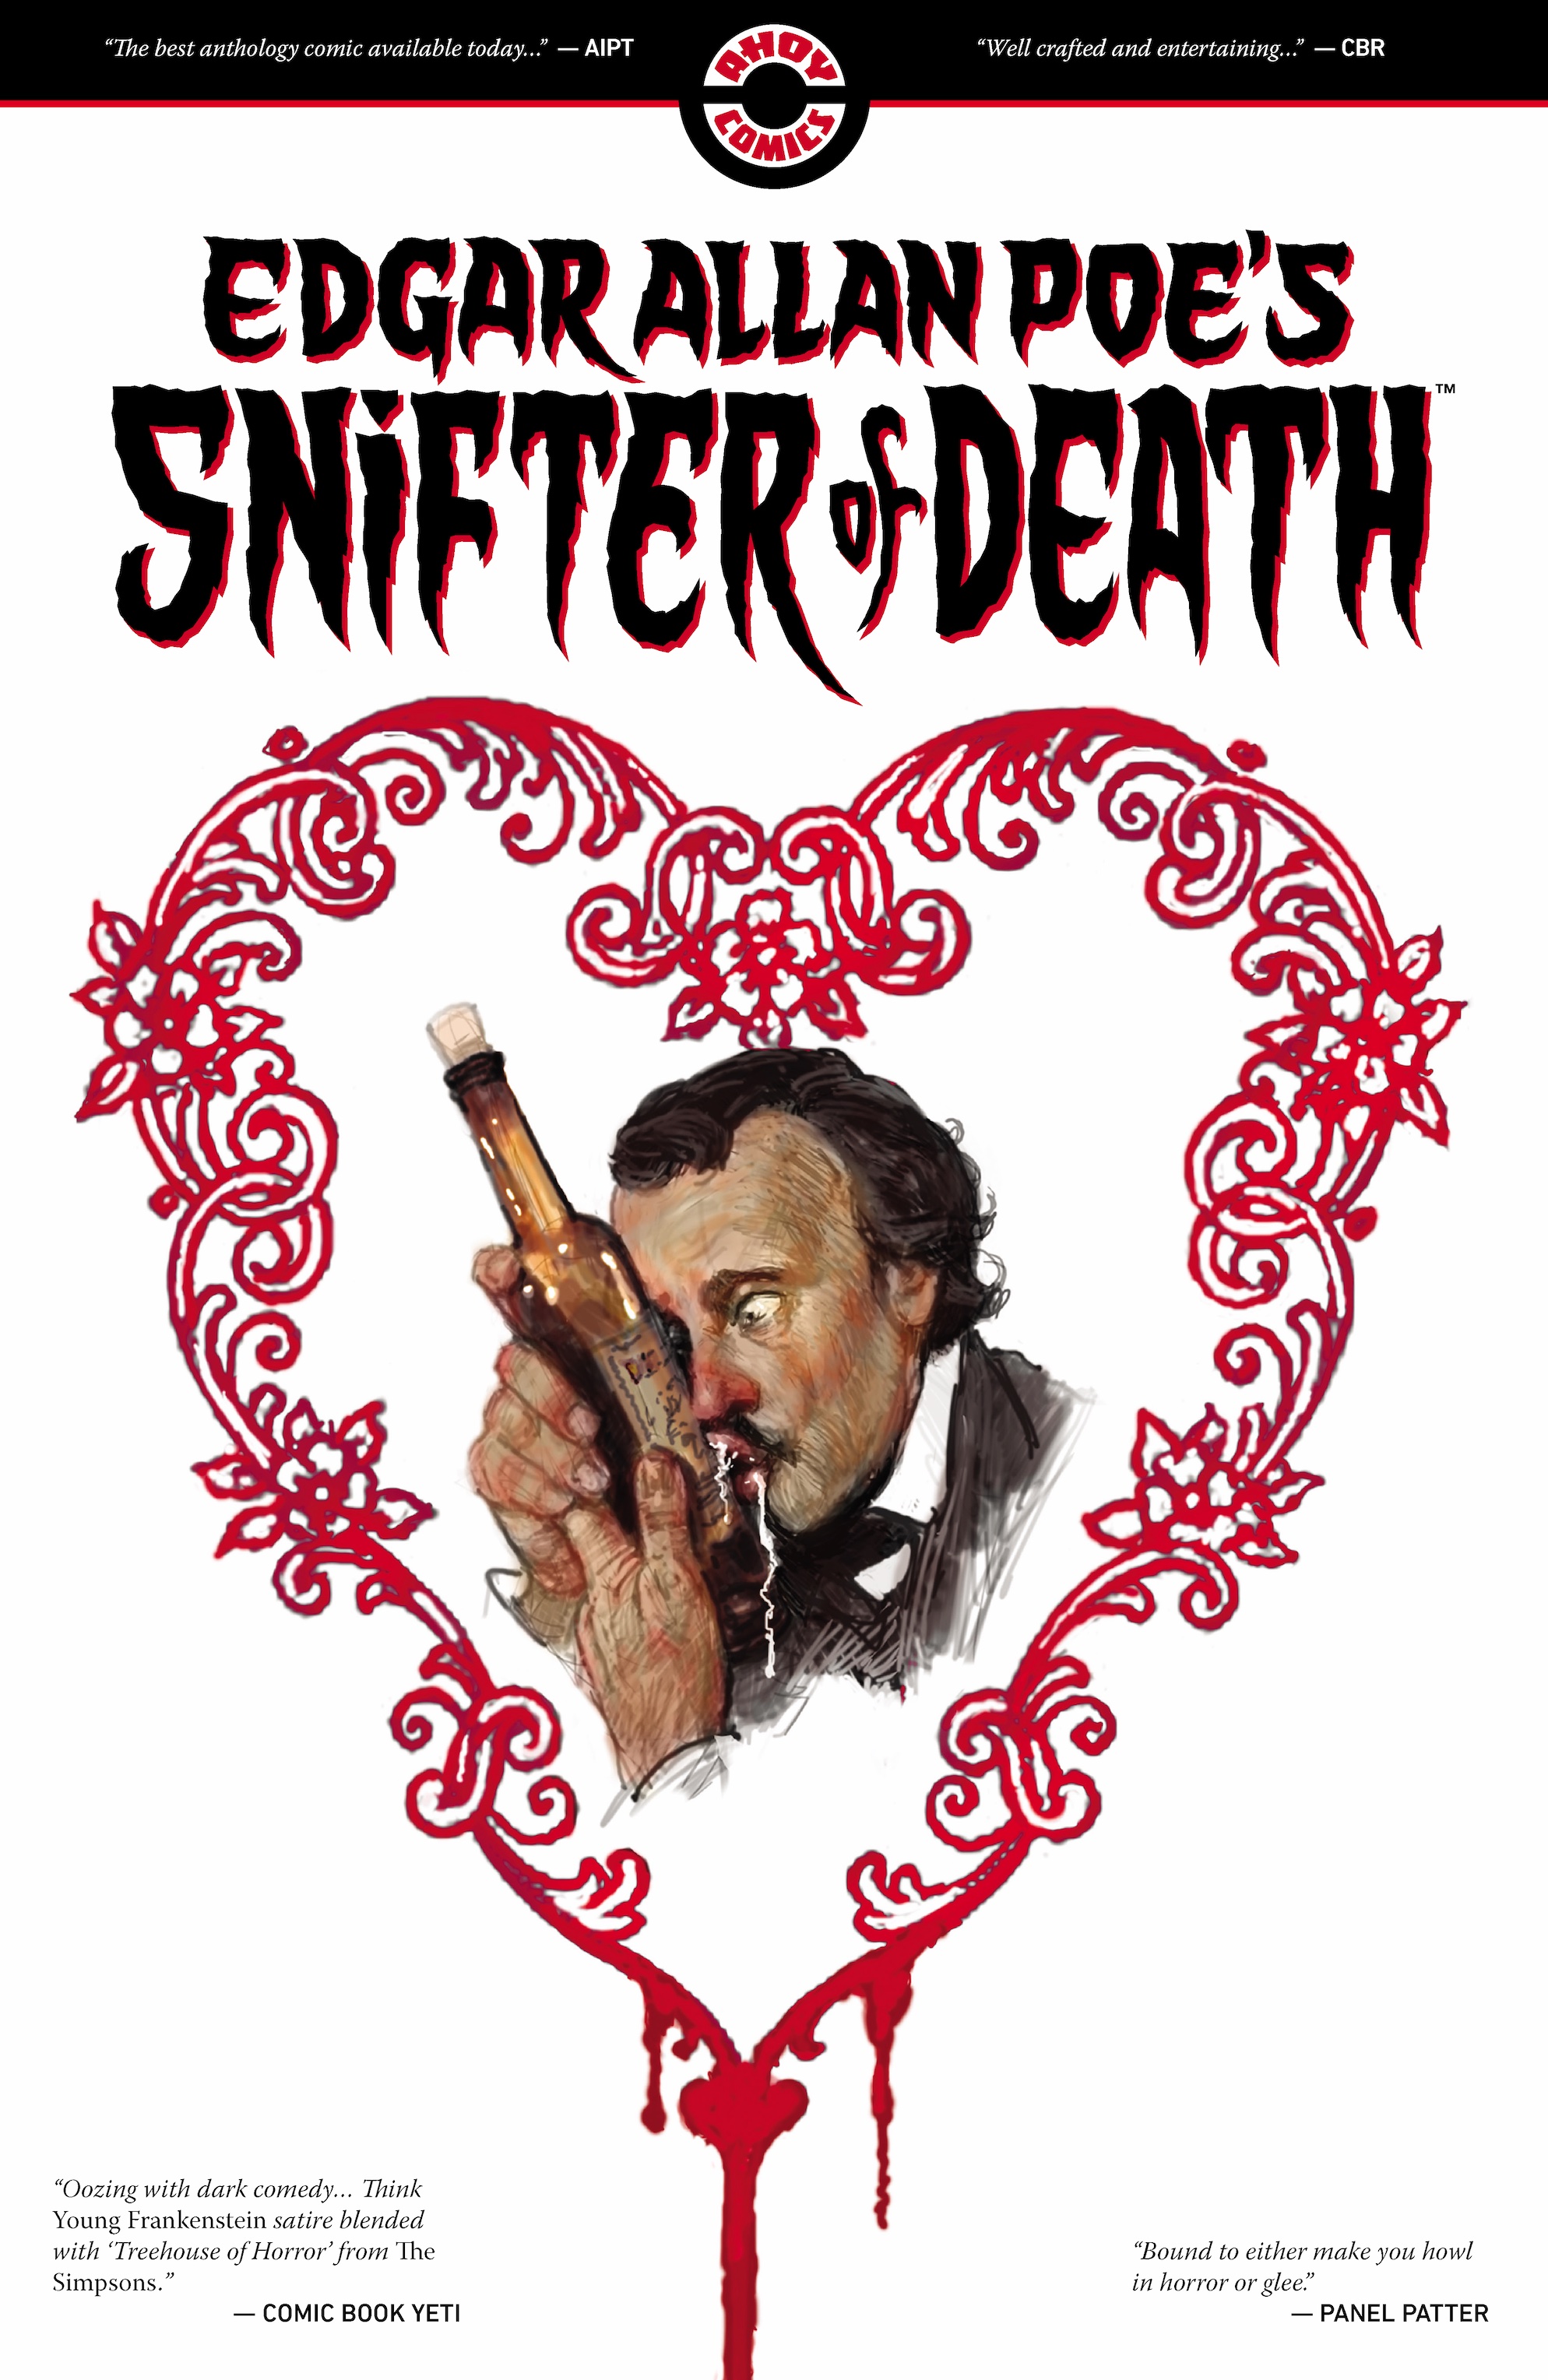 Edgar Allan Poes Snifter of Death Graphic Novel